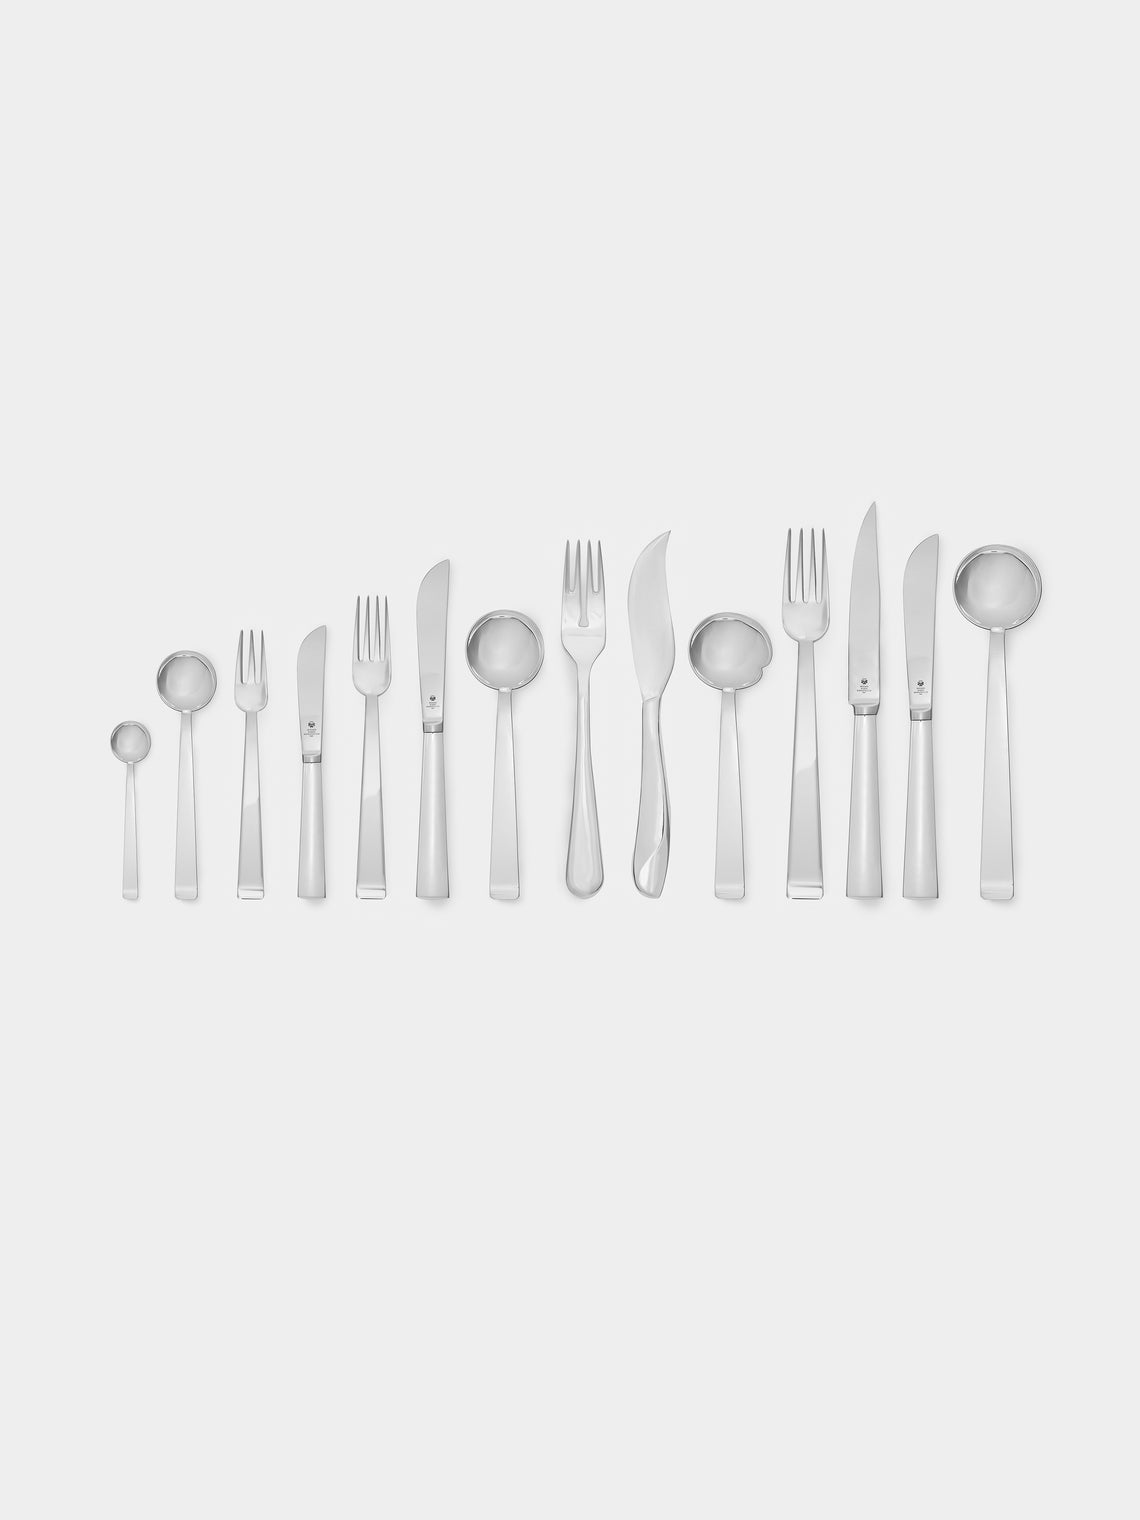 Wiener Silber Manufactur - Josef Hoffmann 135 Silver-Plated Mocca Spoon - Silver - ABASK